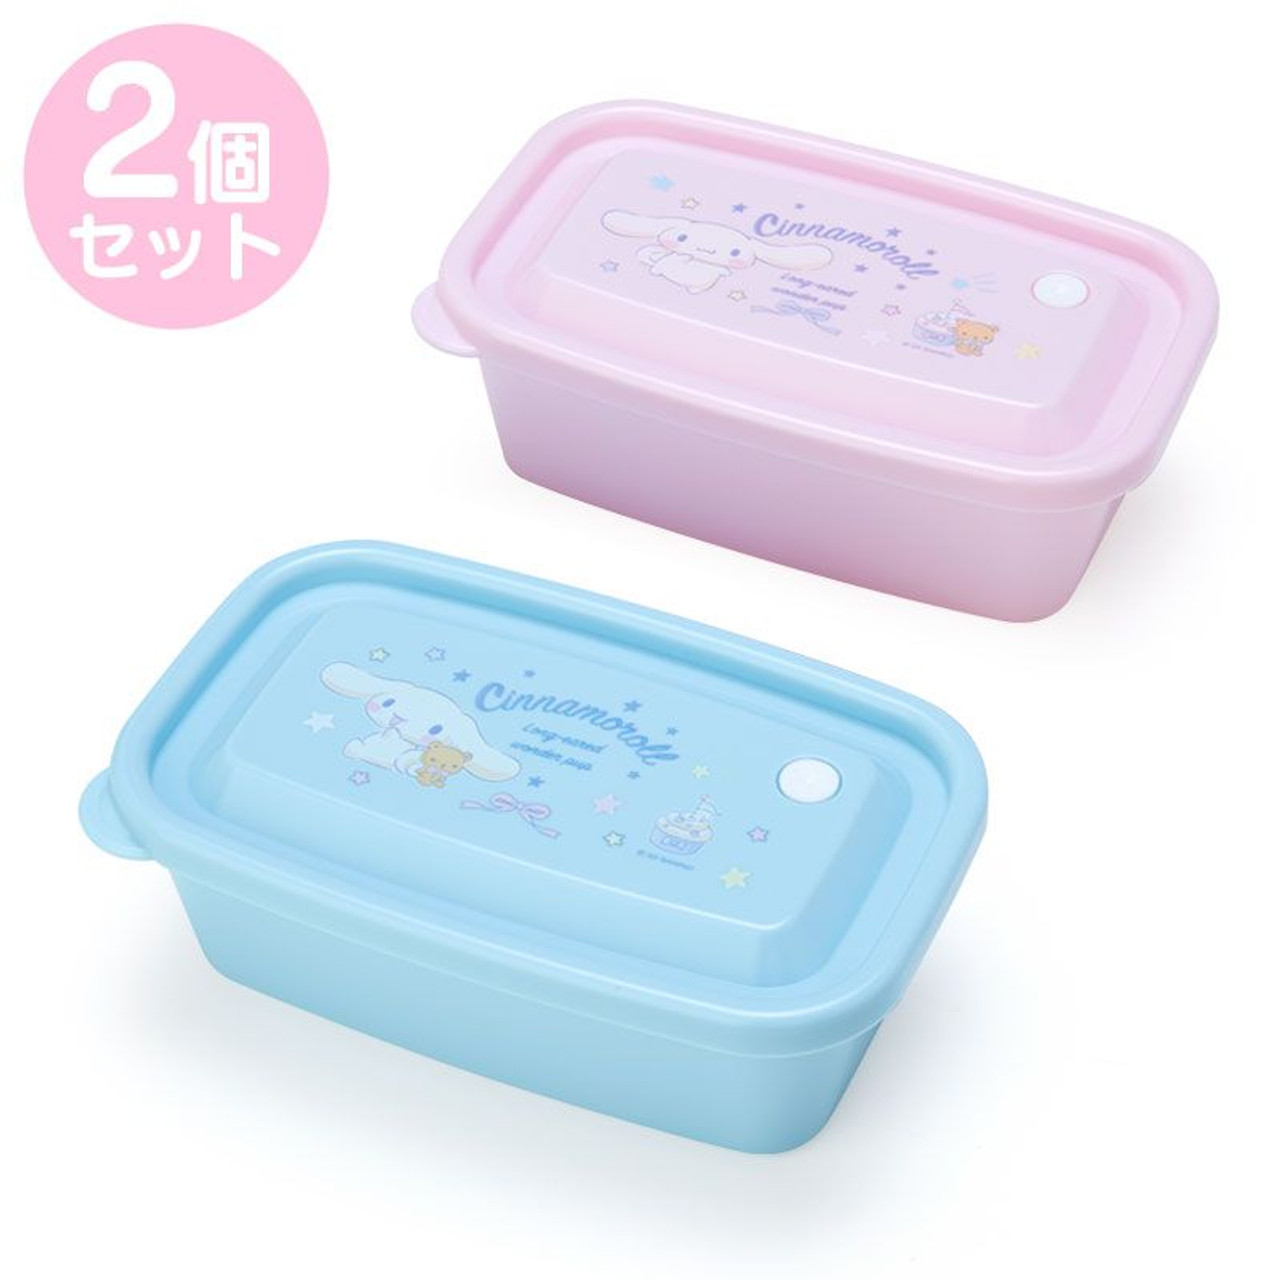 Sanrio Bento Lunch Box, Sanrio Food Containers